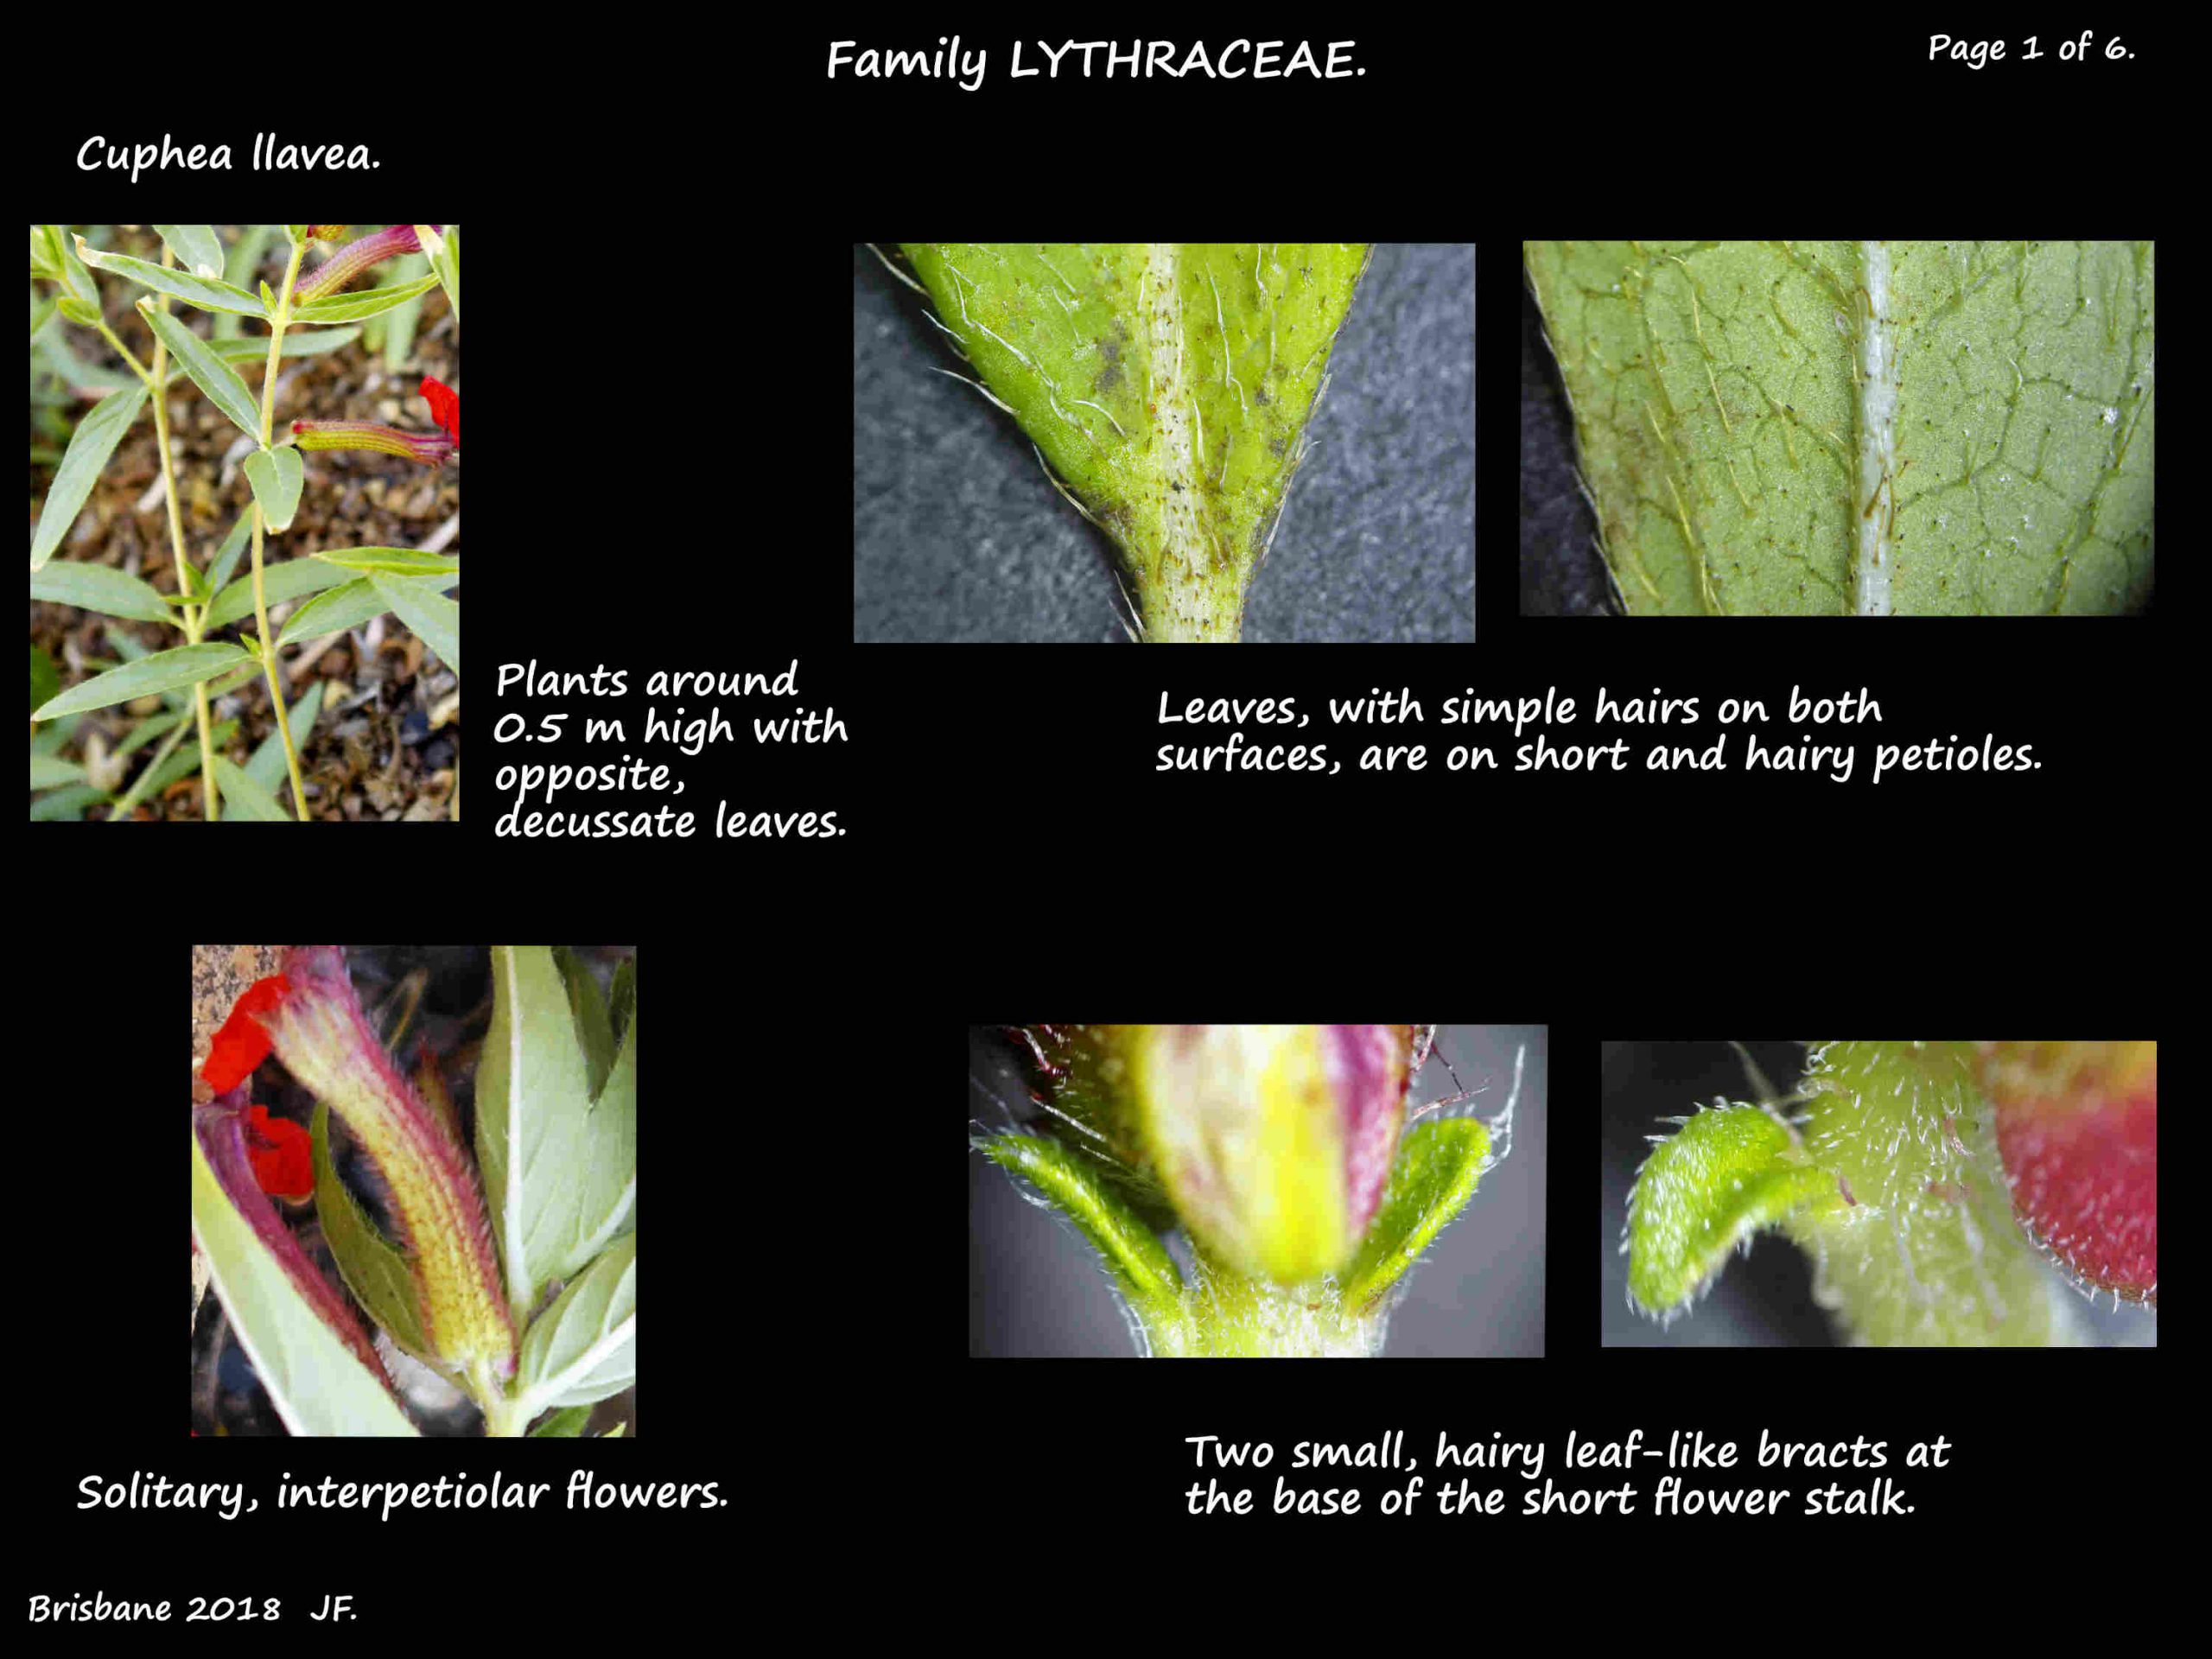 1 Cuphea llavea plant & leaves